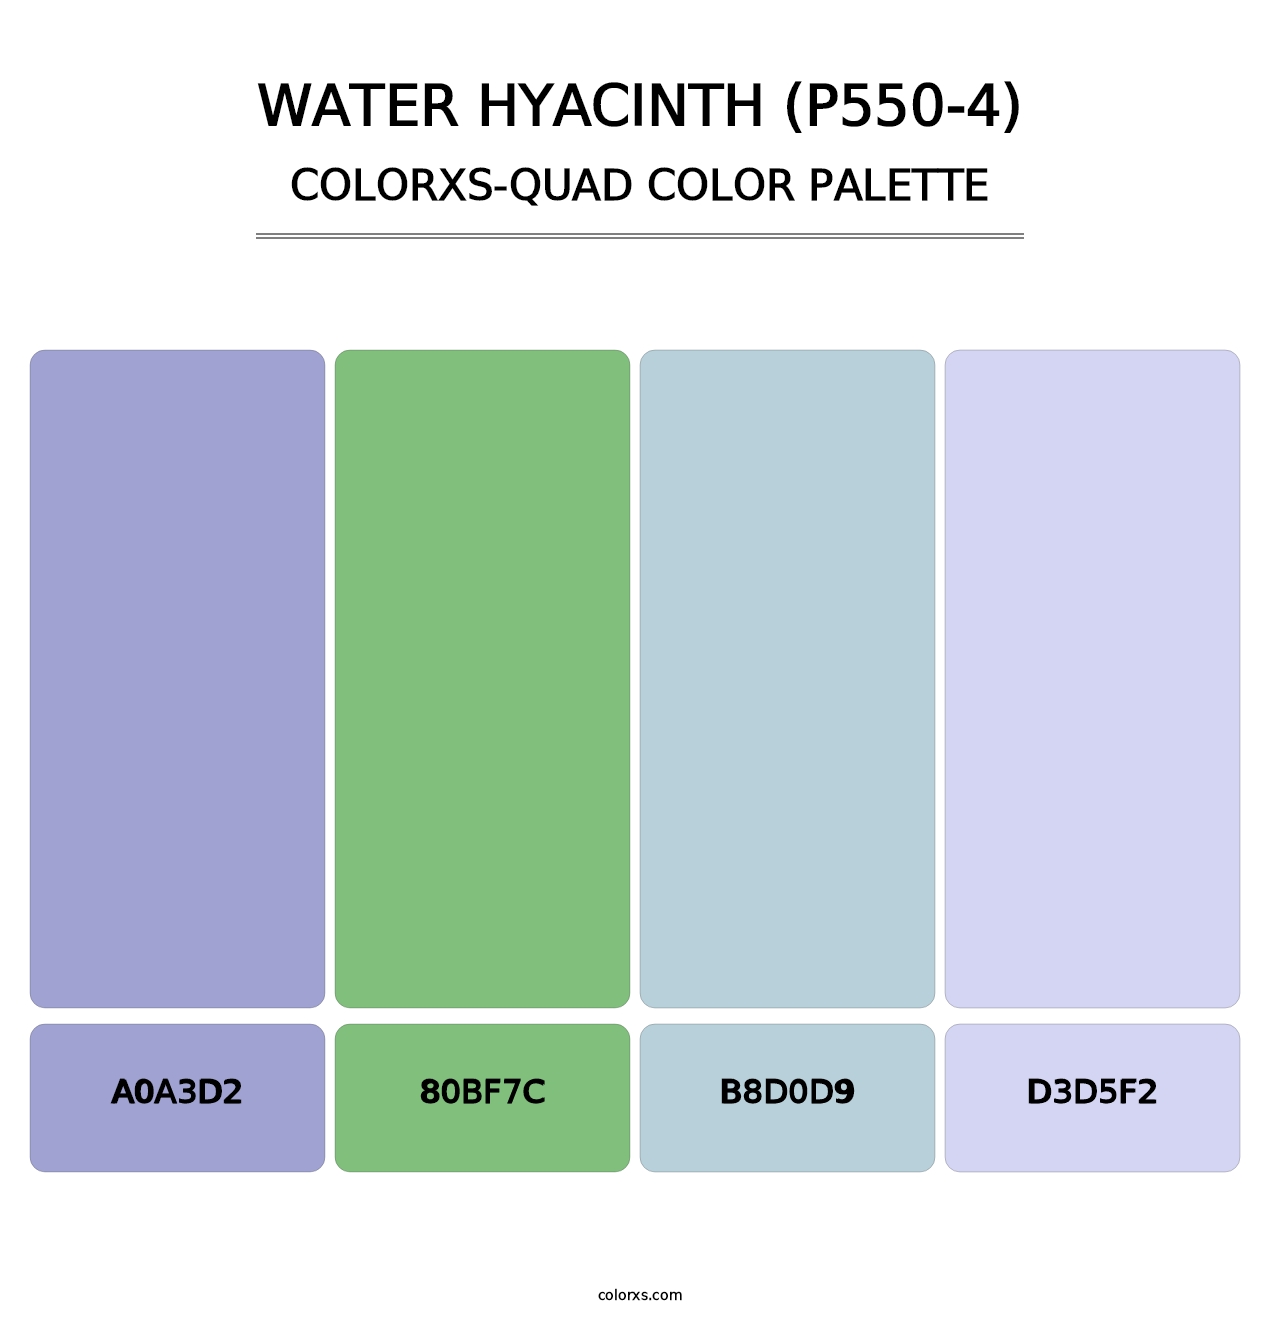 Water Hyacinth (P550-4) - Colorxs Quad Palette